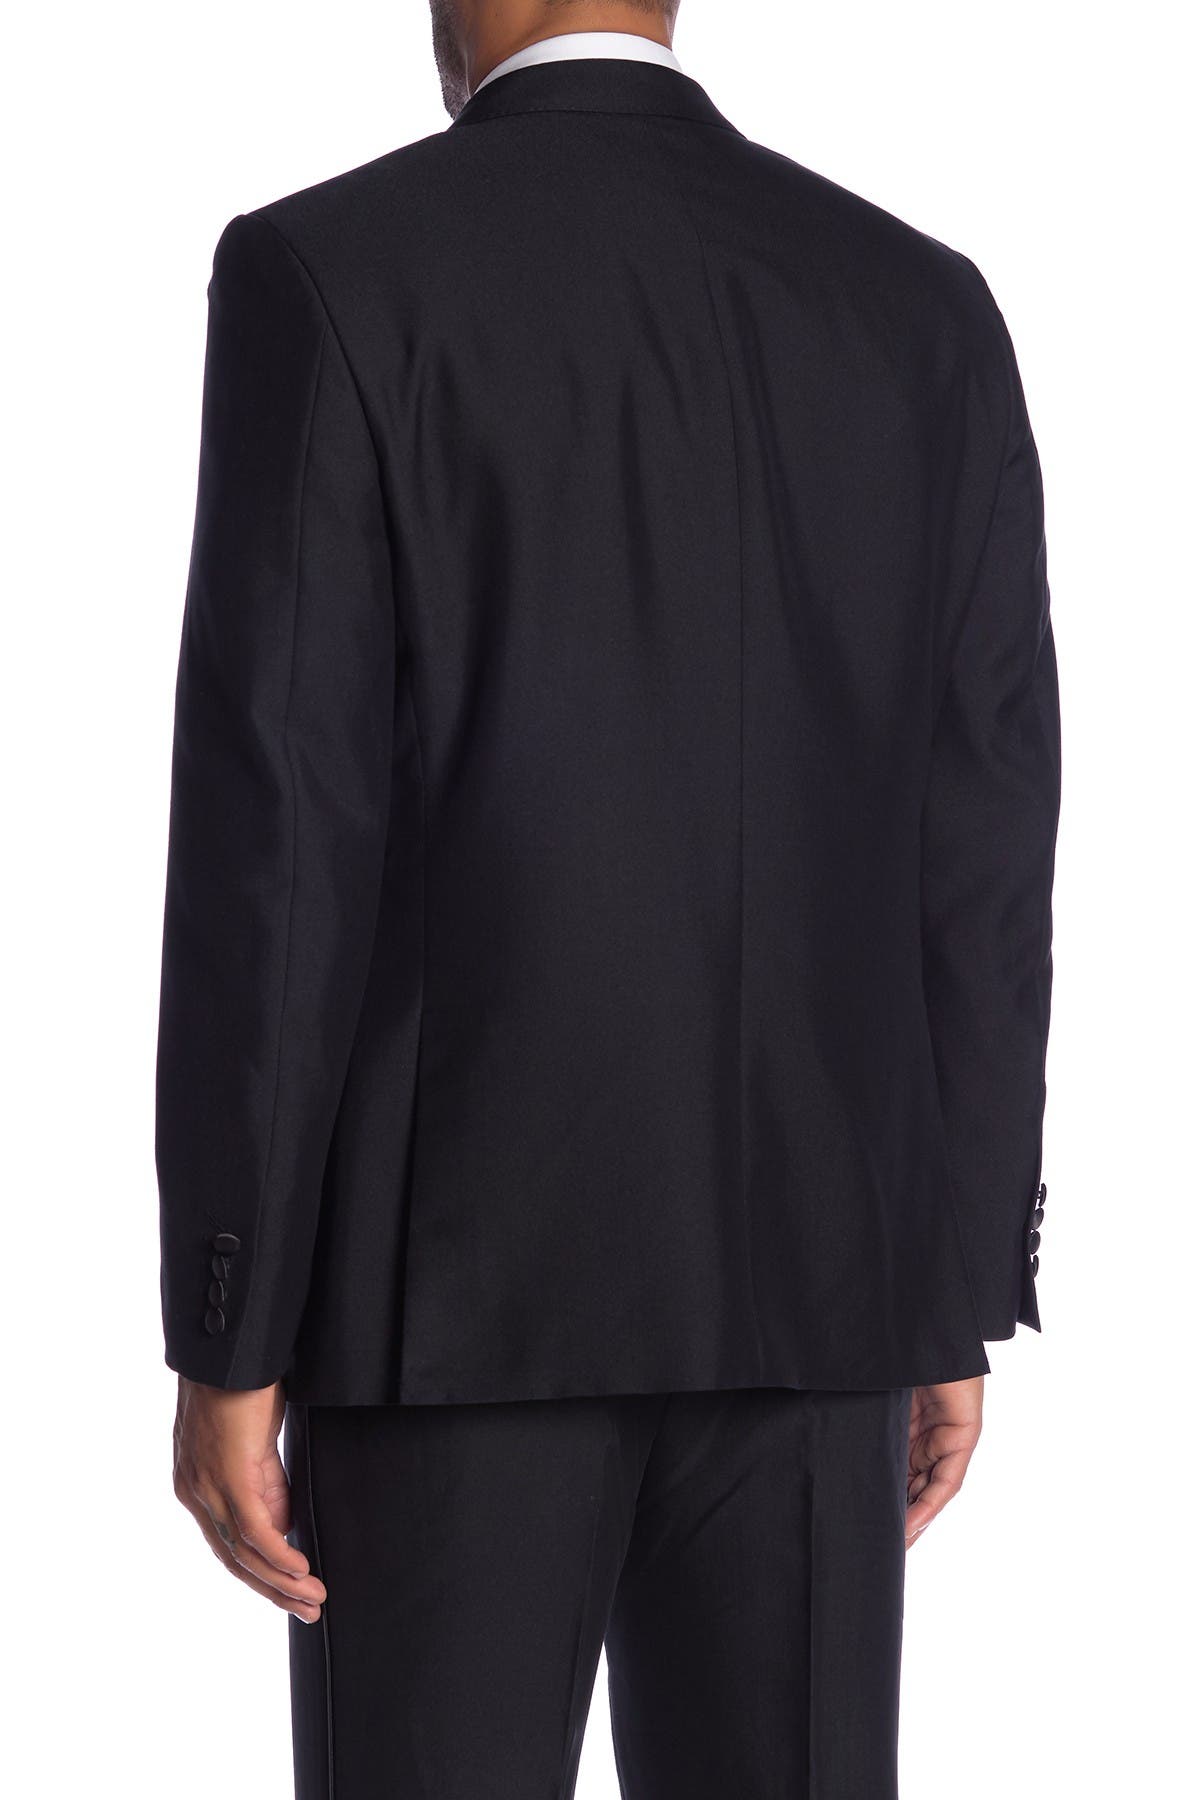 calvin klein black solid modern fit tuxedo jacket